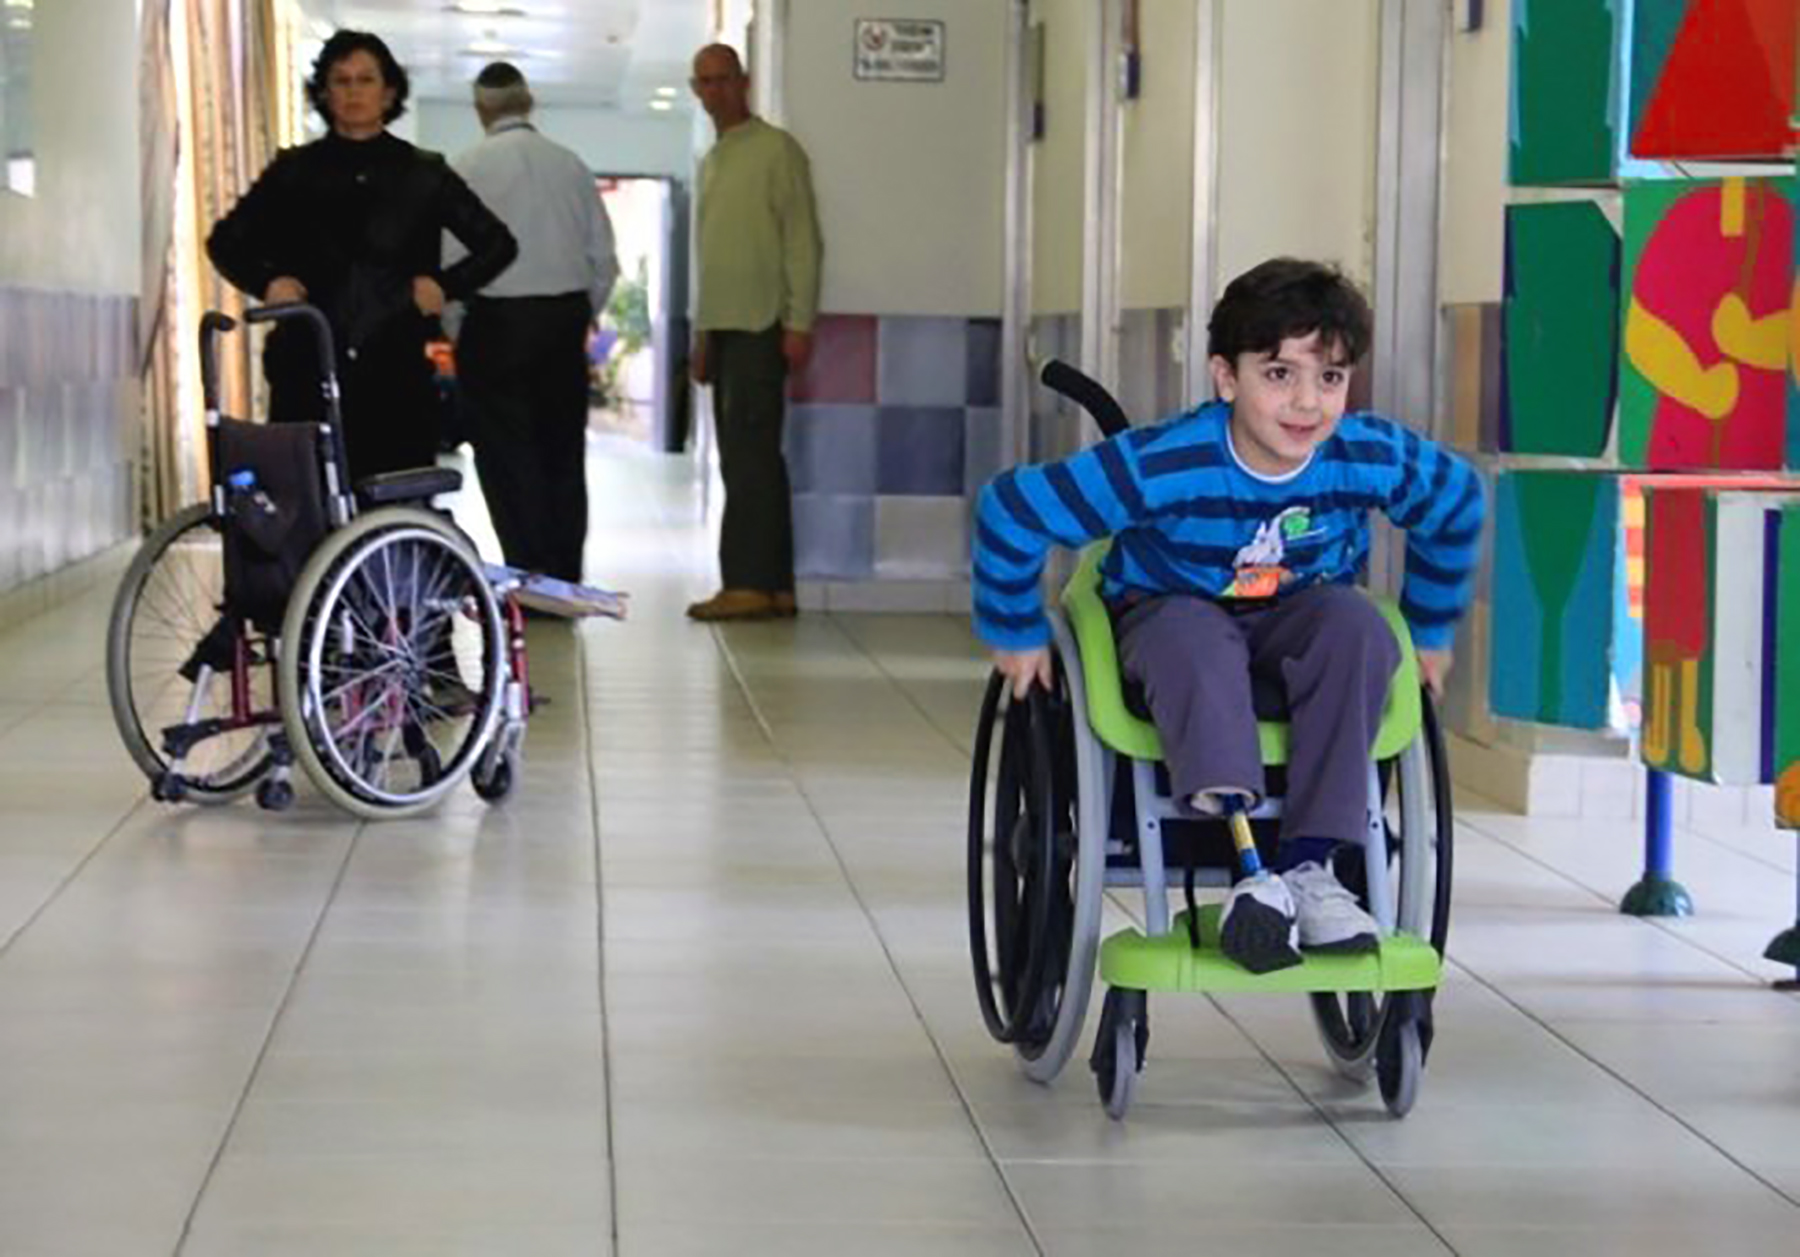 Сын инвалид детства. Дети инвалиды. Ребенок в инвалидной коляске. Коляска для детей инвалидов. Дети инвалиды колясочники.